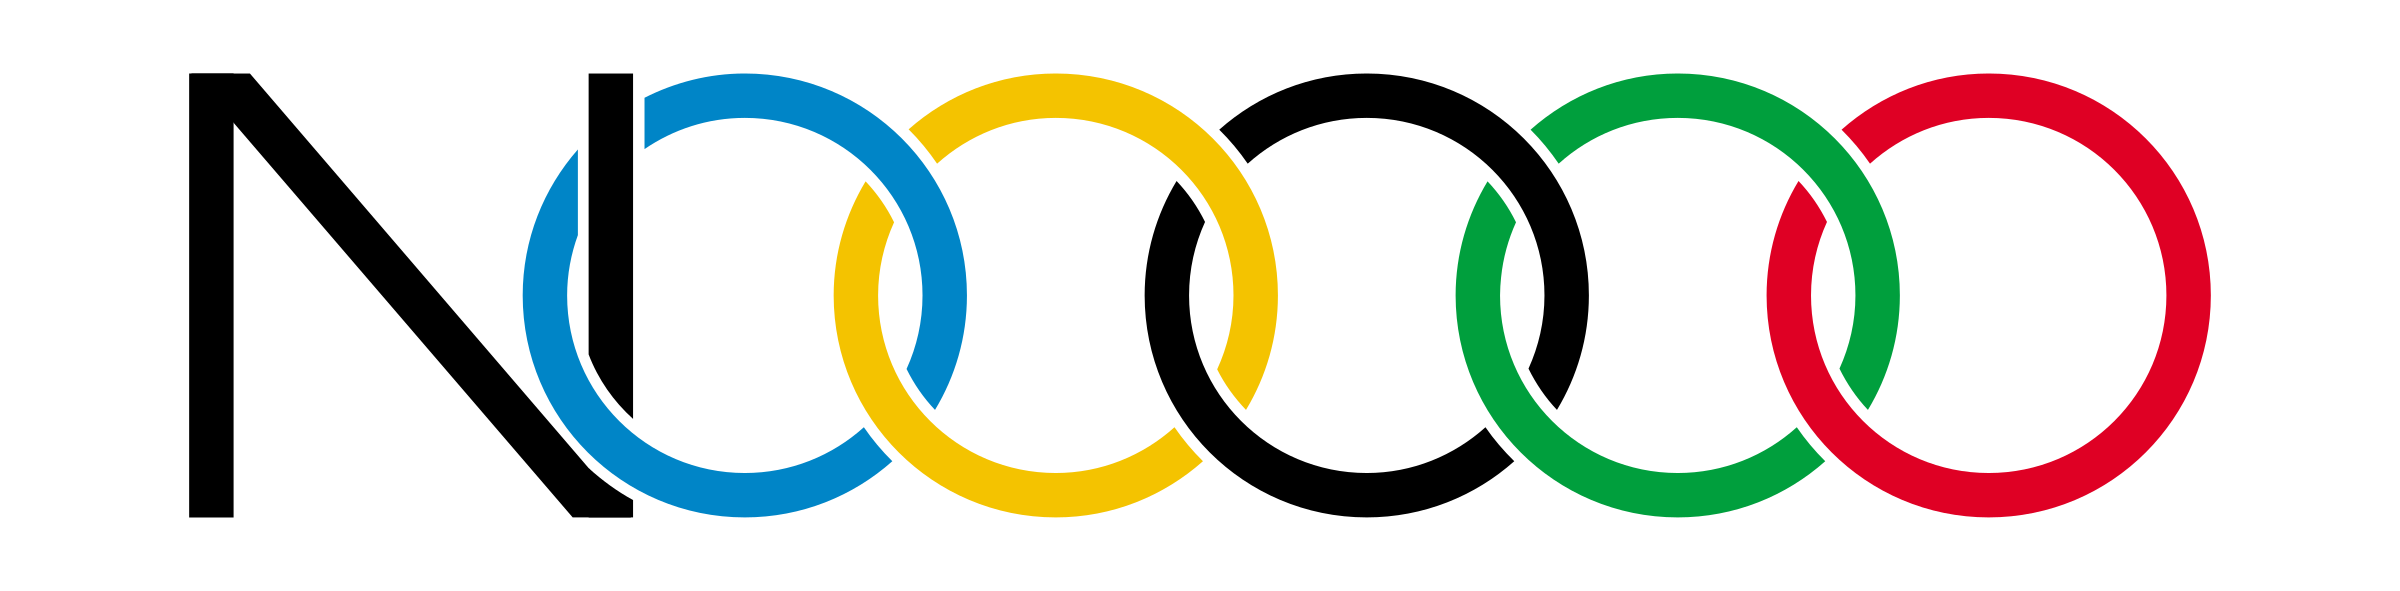 olympics clipart transparent